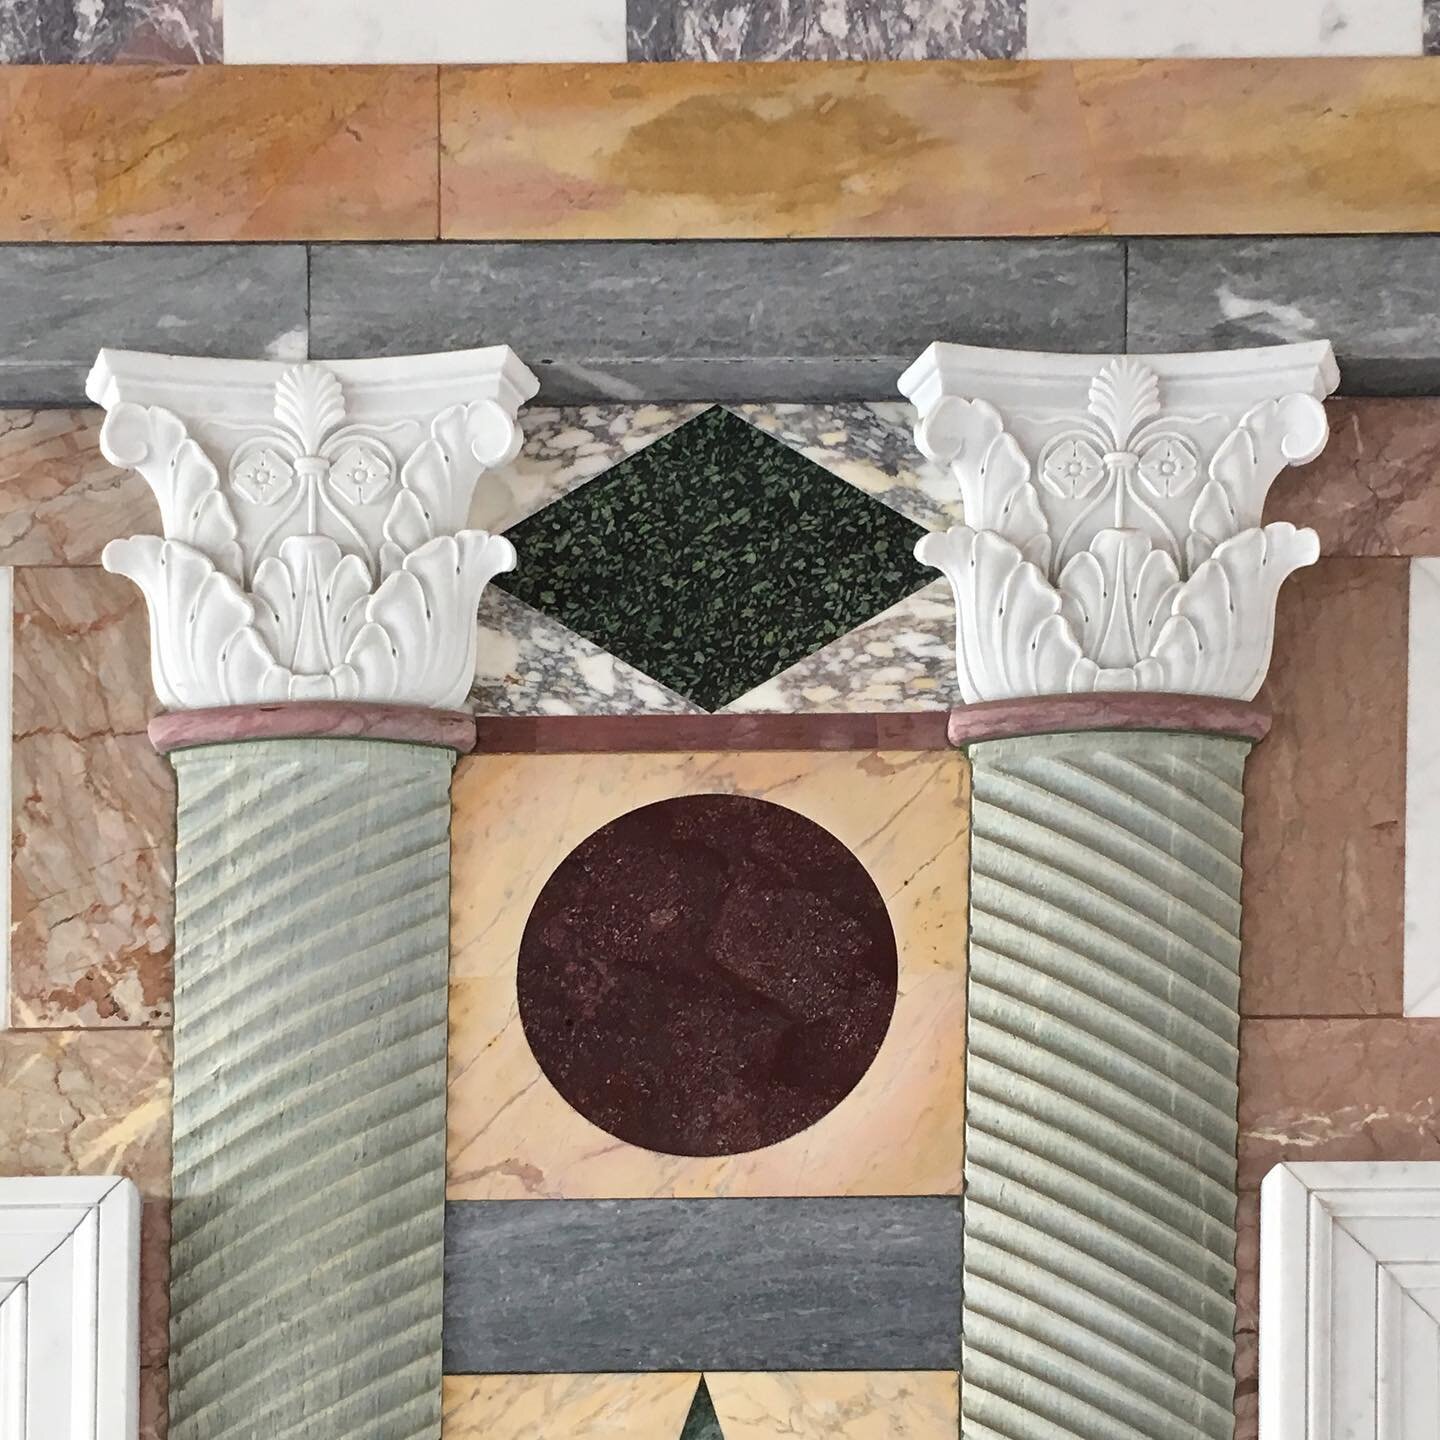 Getty Villa - Los Angeles .
.
.
.
.
#losangeles #pattern #marble #architecture #classical #geometric